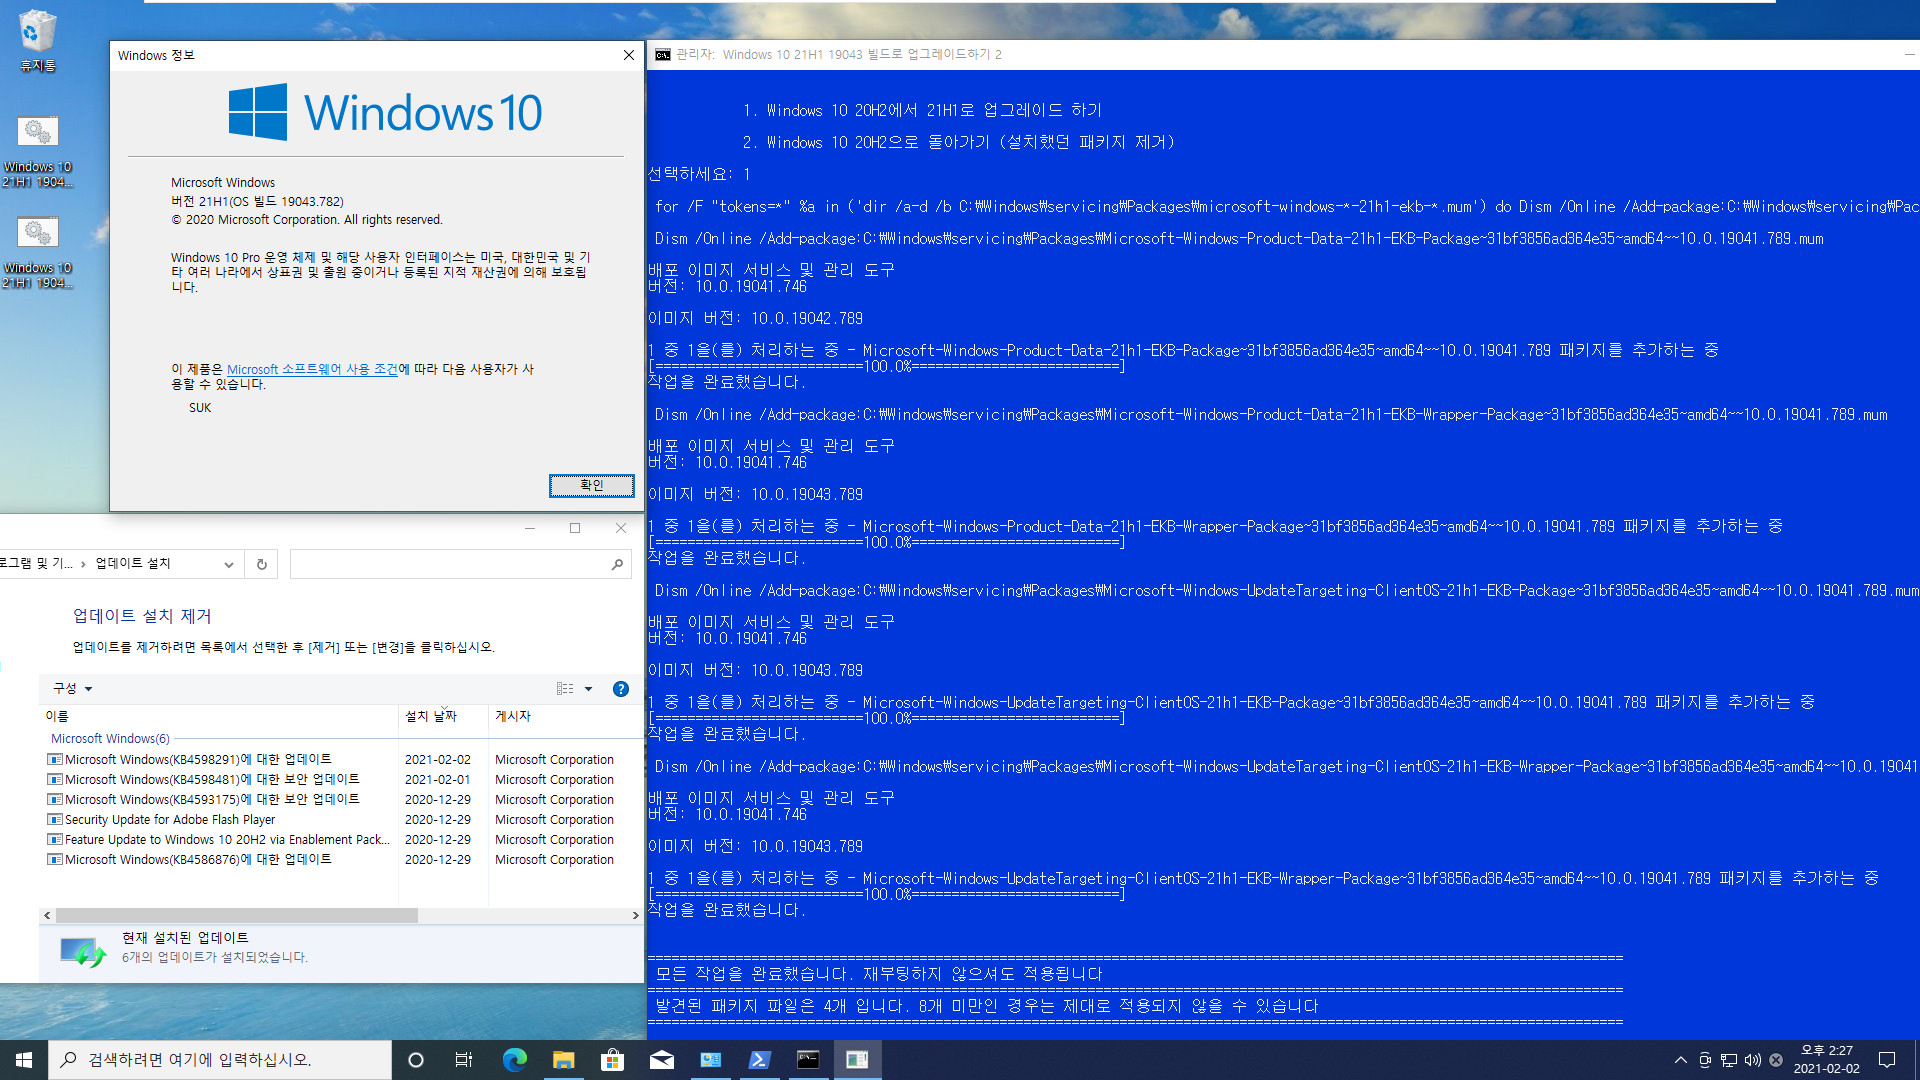 Windows 10 21H1 19043 빌드로 업그레이드하기2.bat 테스트 - 21H1 업그레이드 후에 새 누적 업데이트 설치하려면, 21H1 제거한 후에 새 누적 업데이트 설치해야 하네요 2021-02-02_142739.jpg